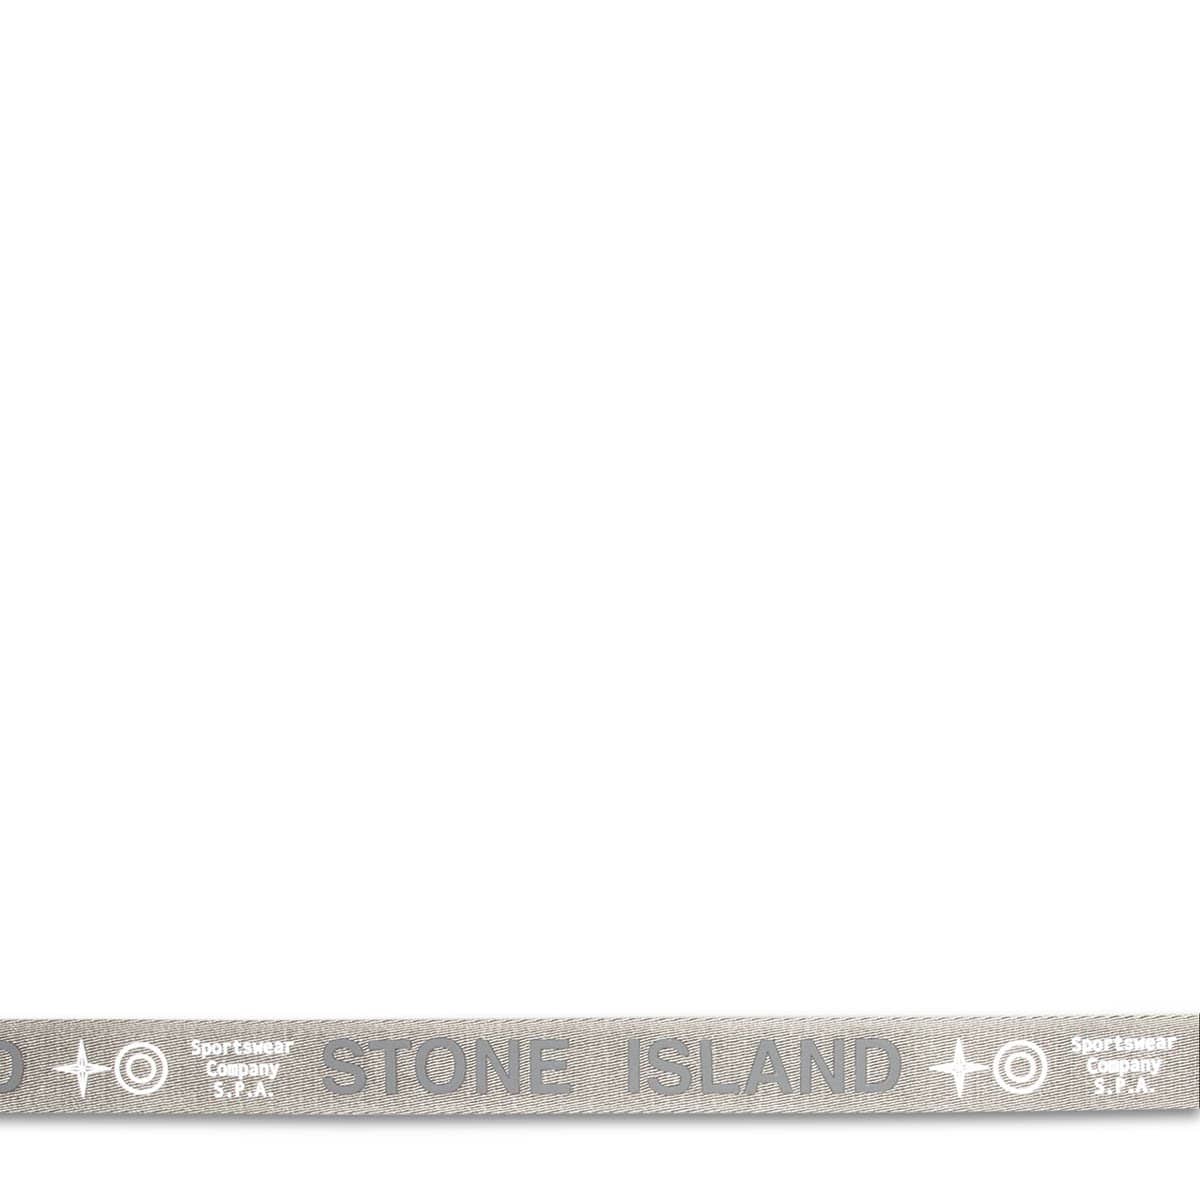 Stone Island Bags & Accessories BELT 731594464